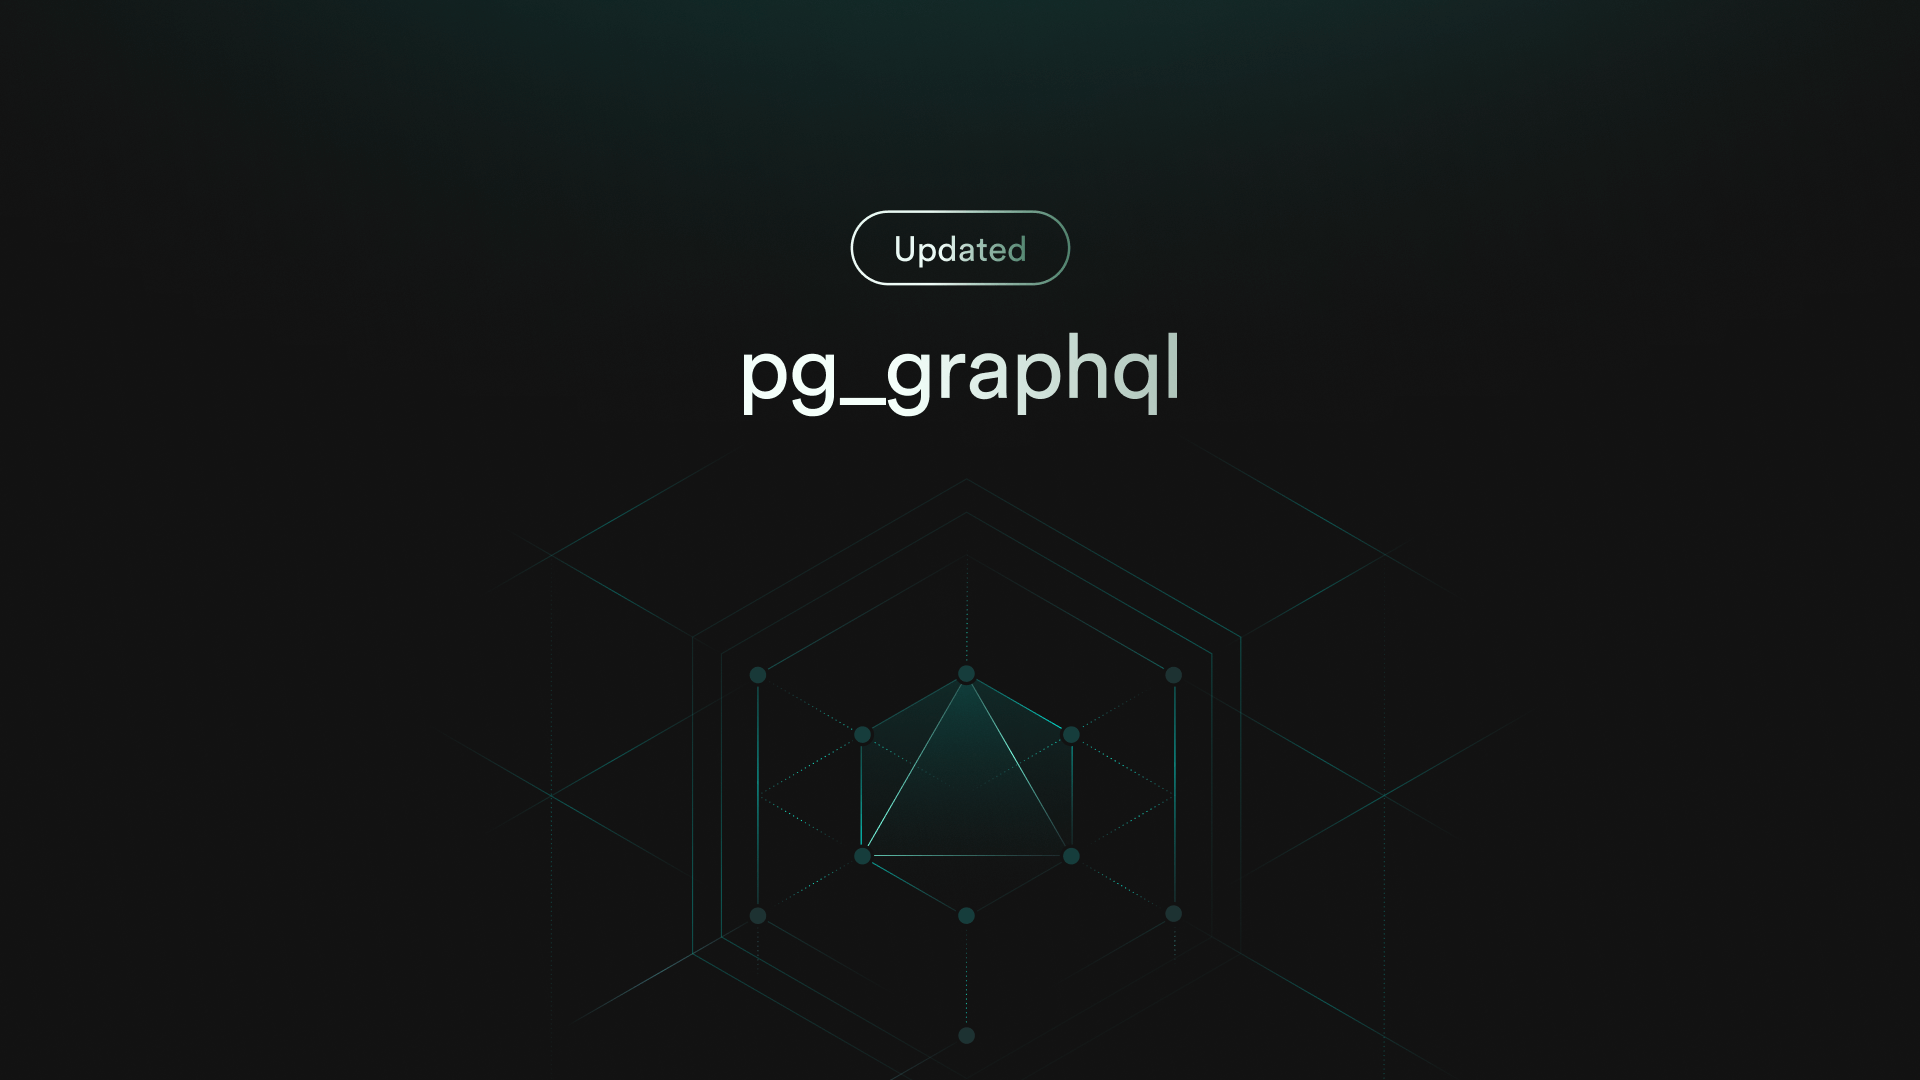 What's New in pg_graphql v1.2